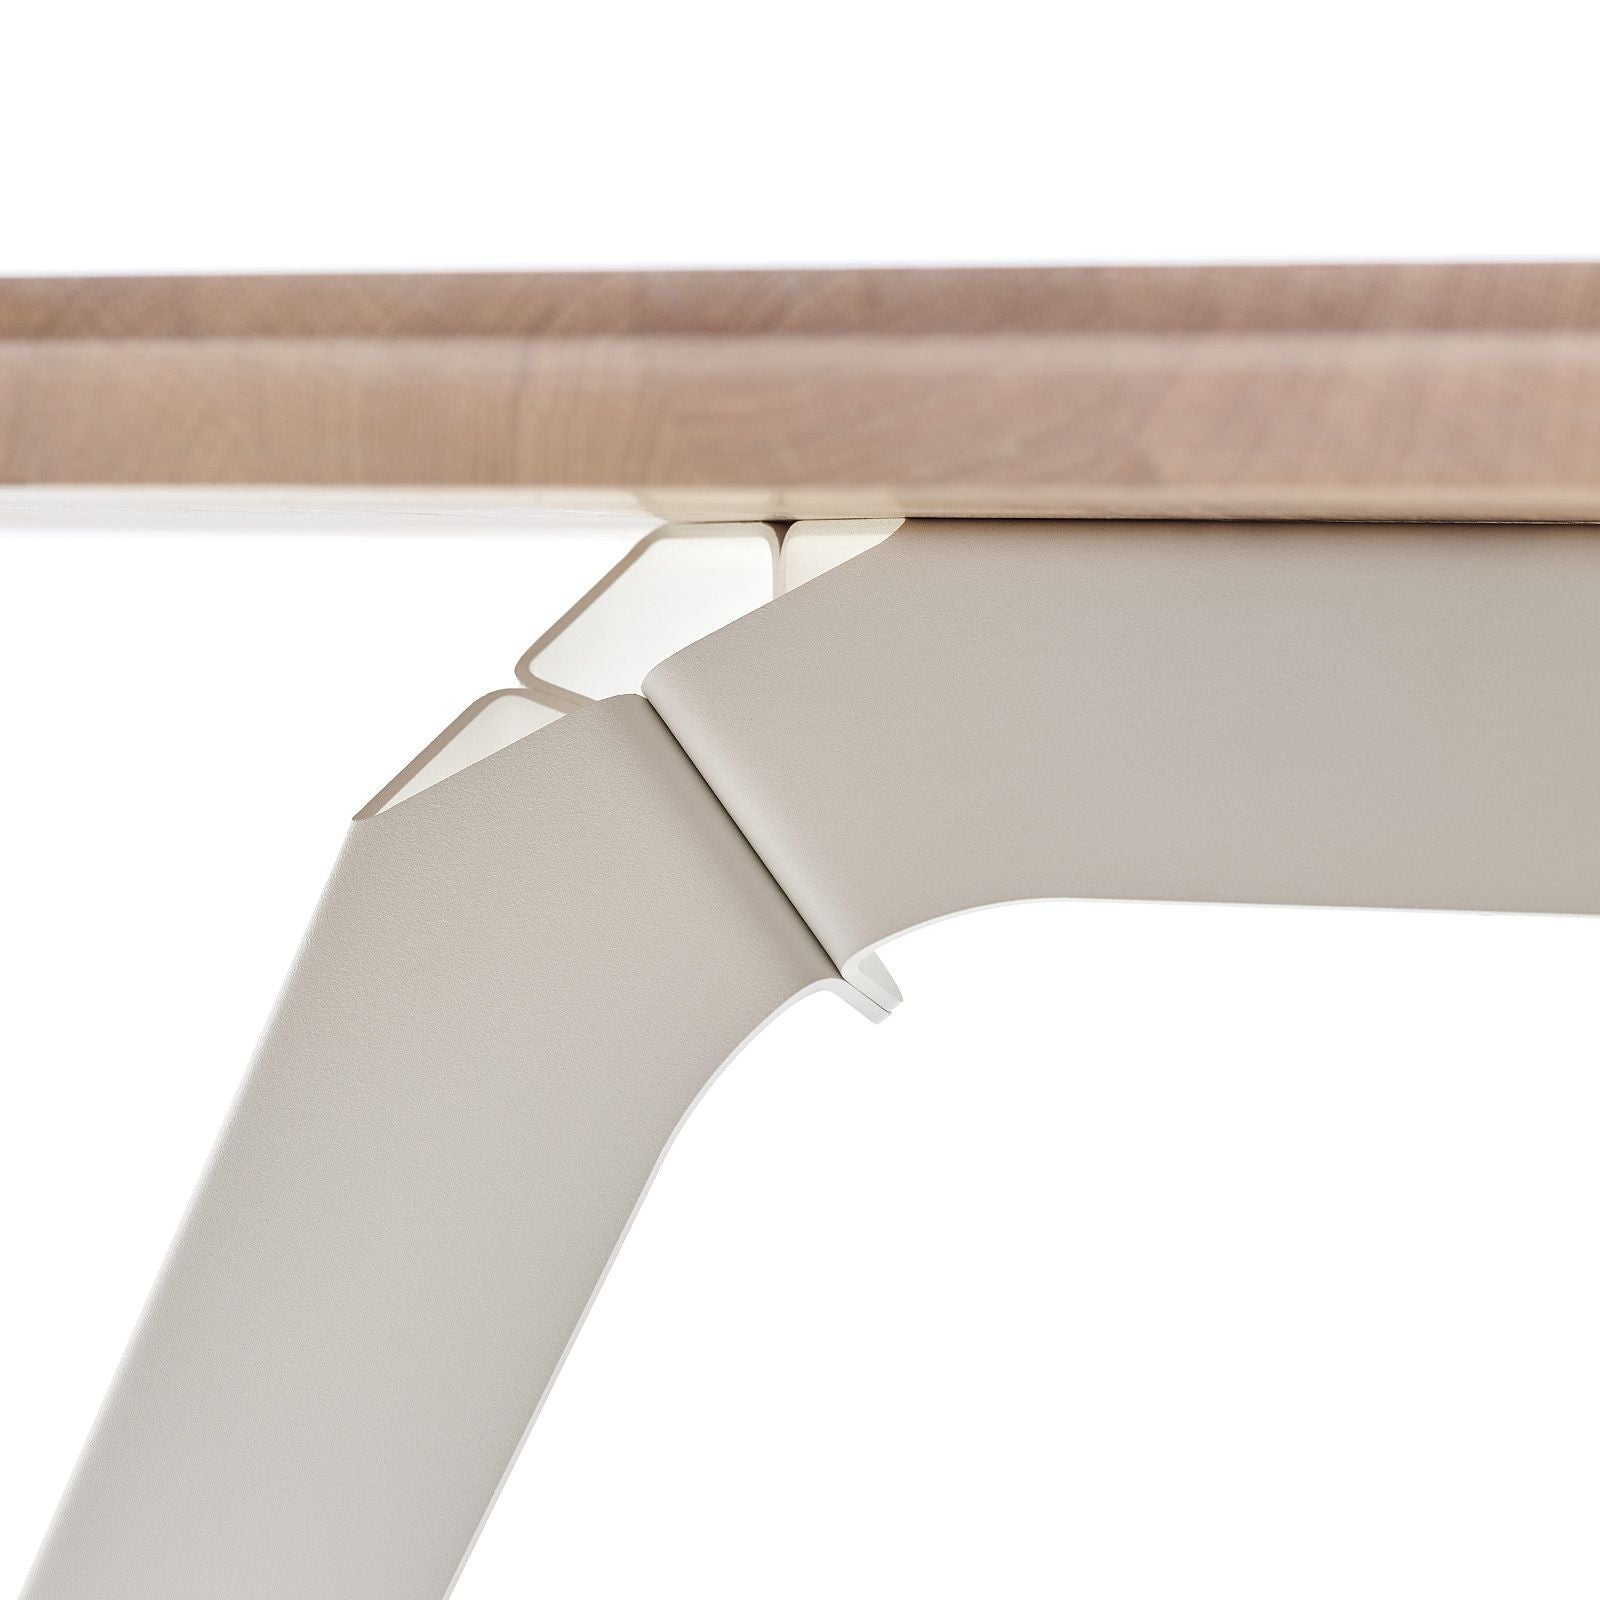 puik褶皱餐桌240x100cm，白色 /自然